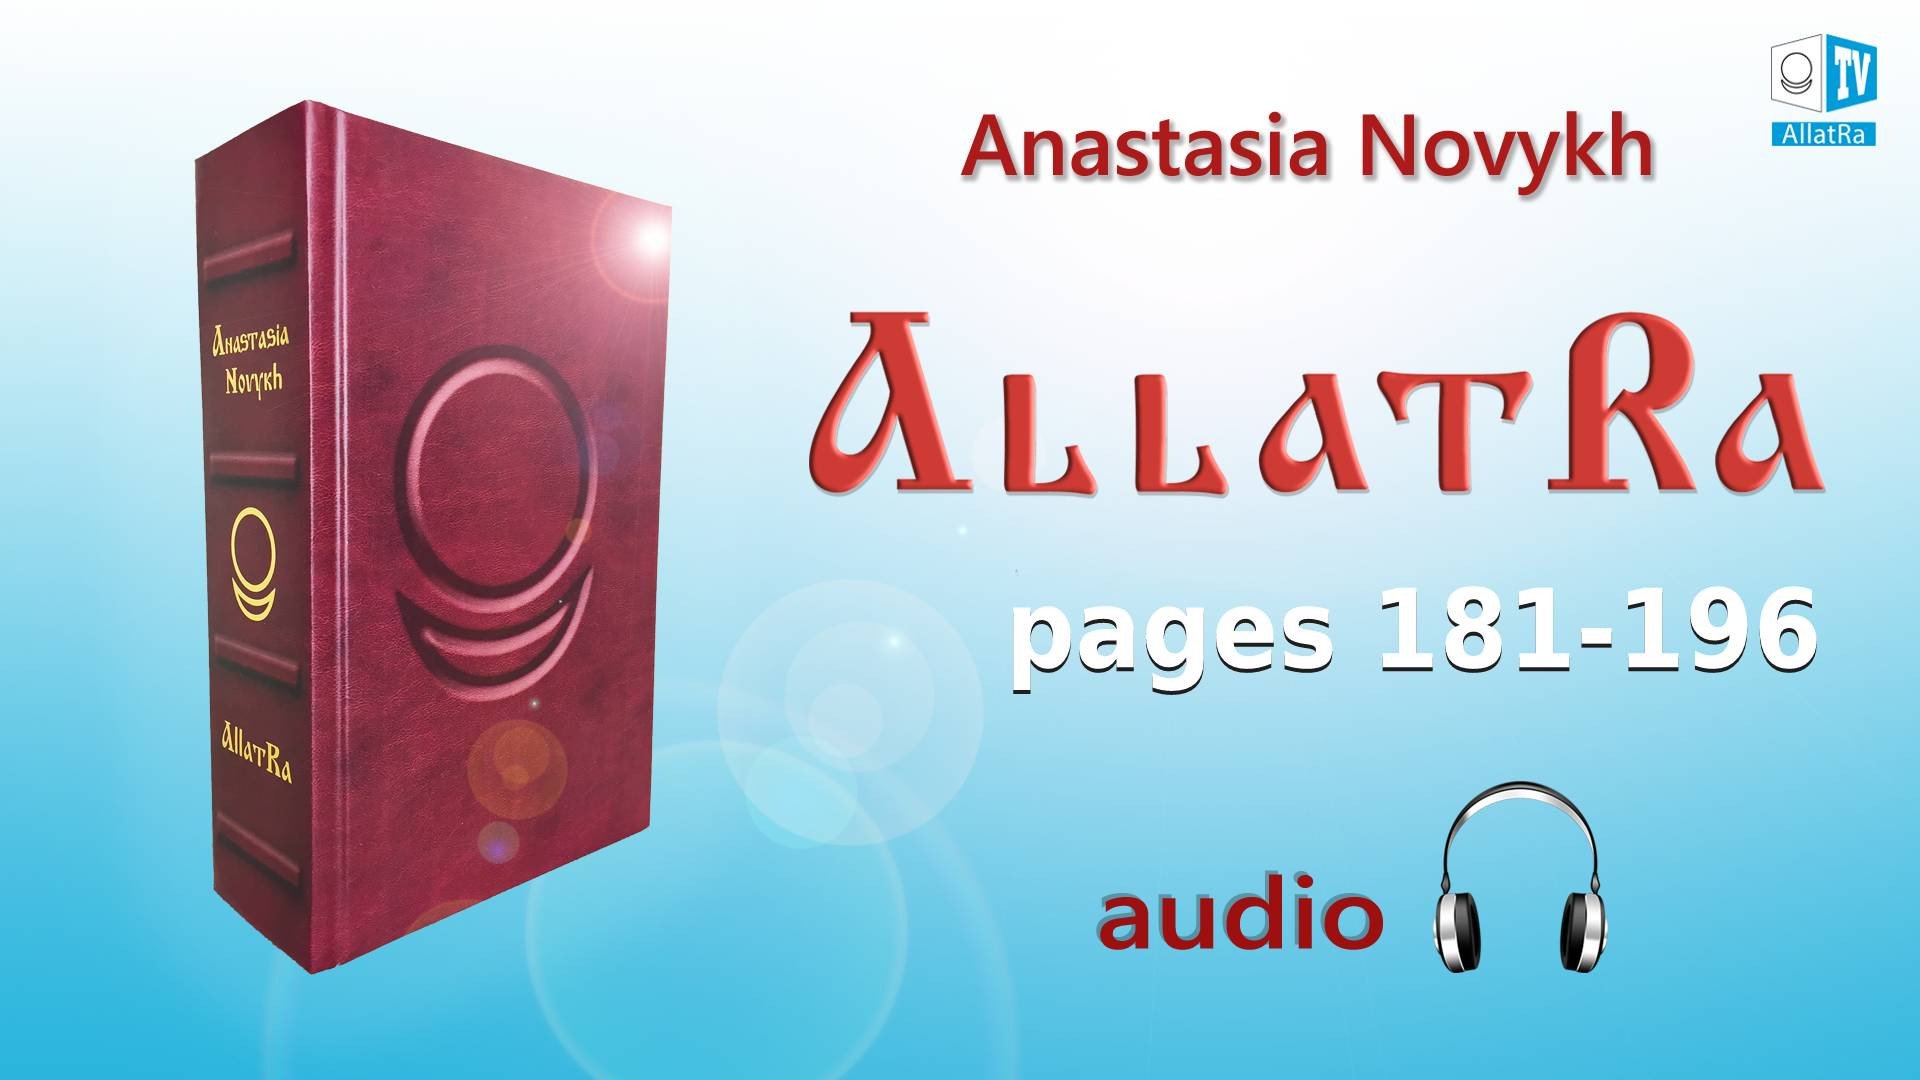 АllatRa. Anastasia Novykh. Audiobook. Pages 181-196